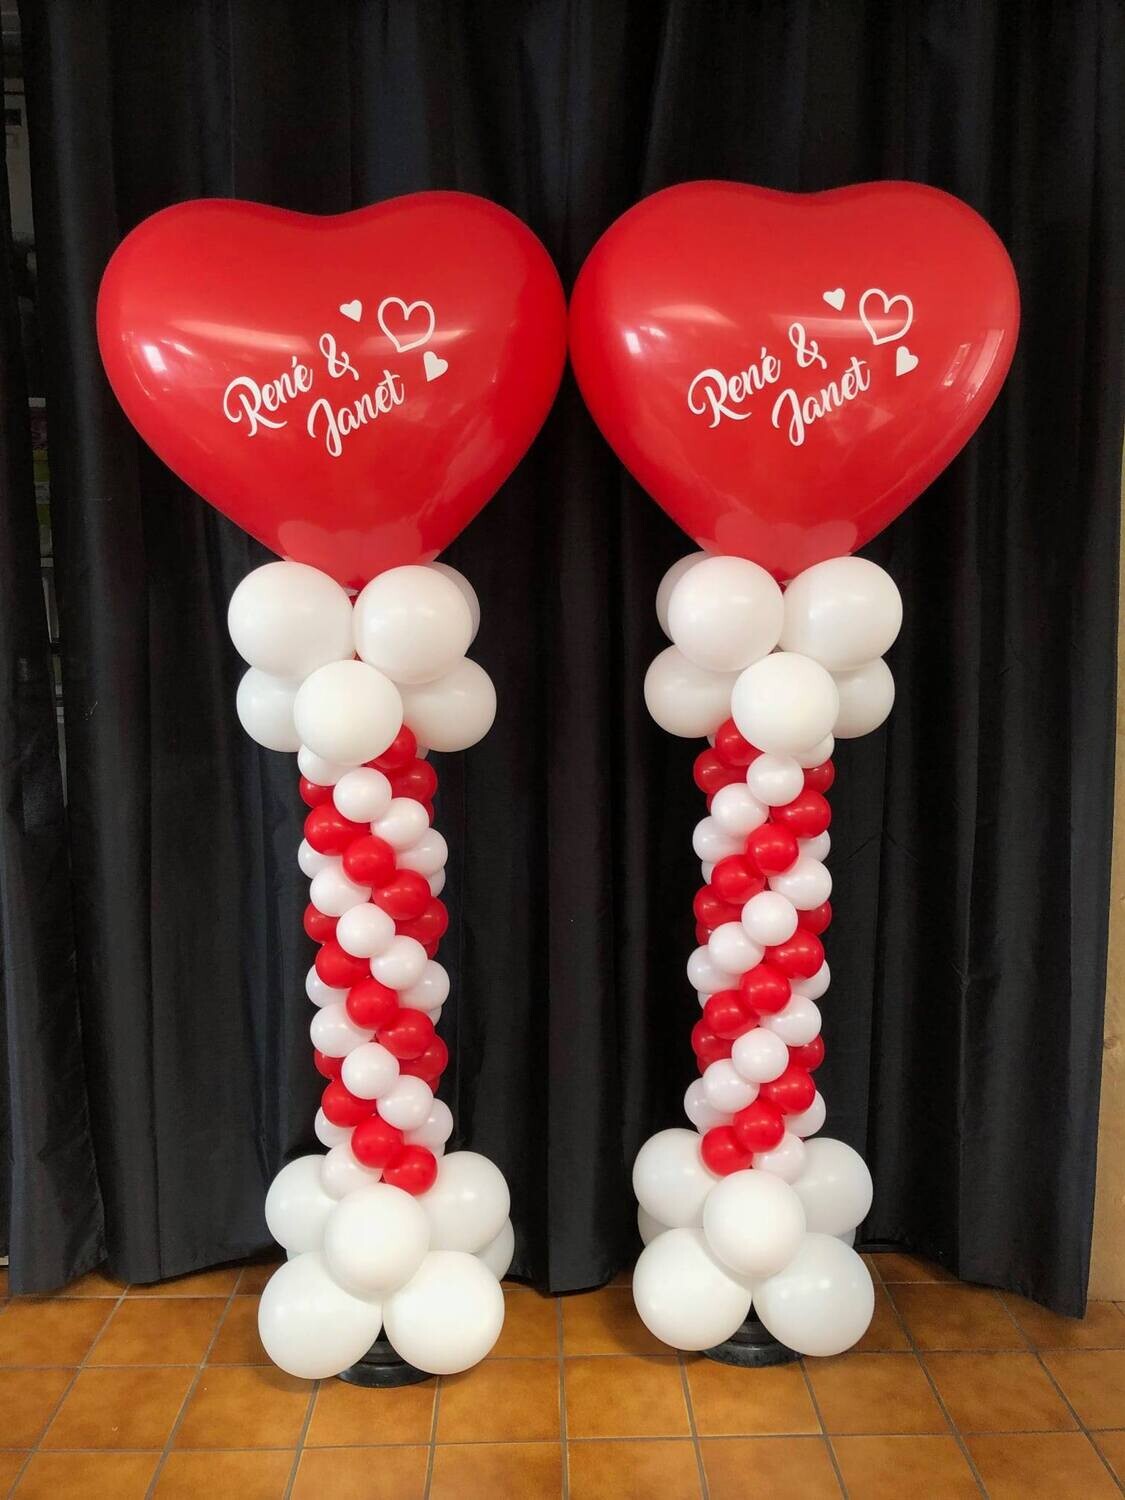 A custom printed balloon column with giant latex heart